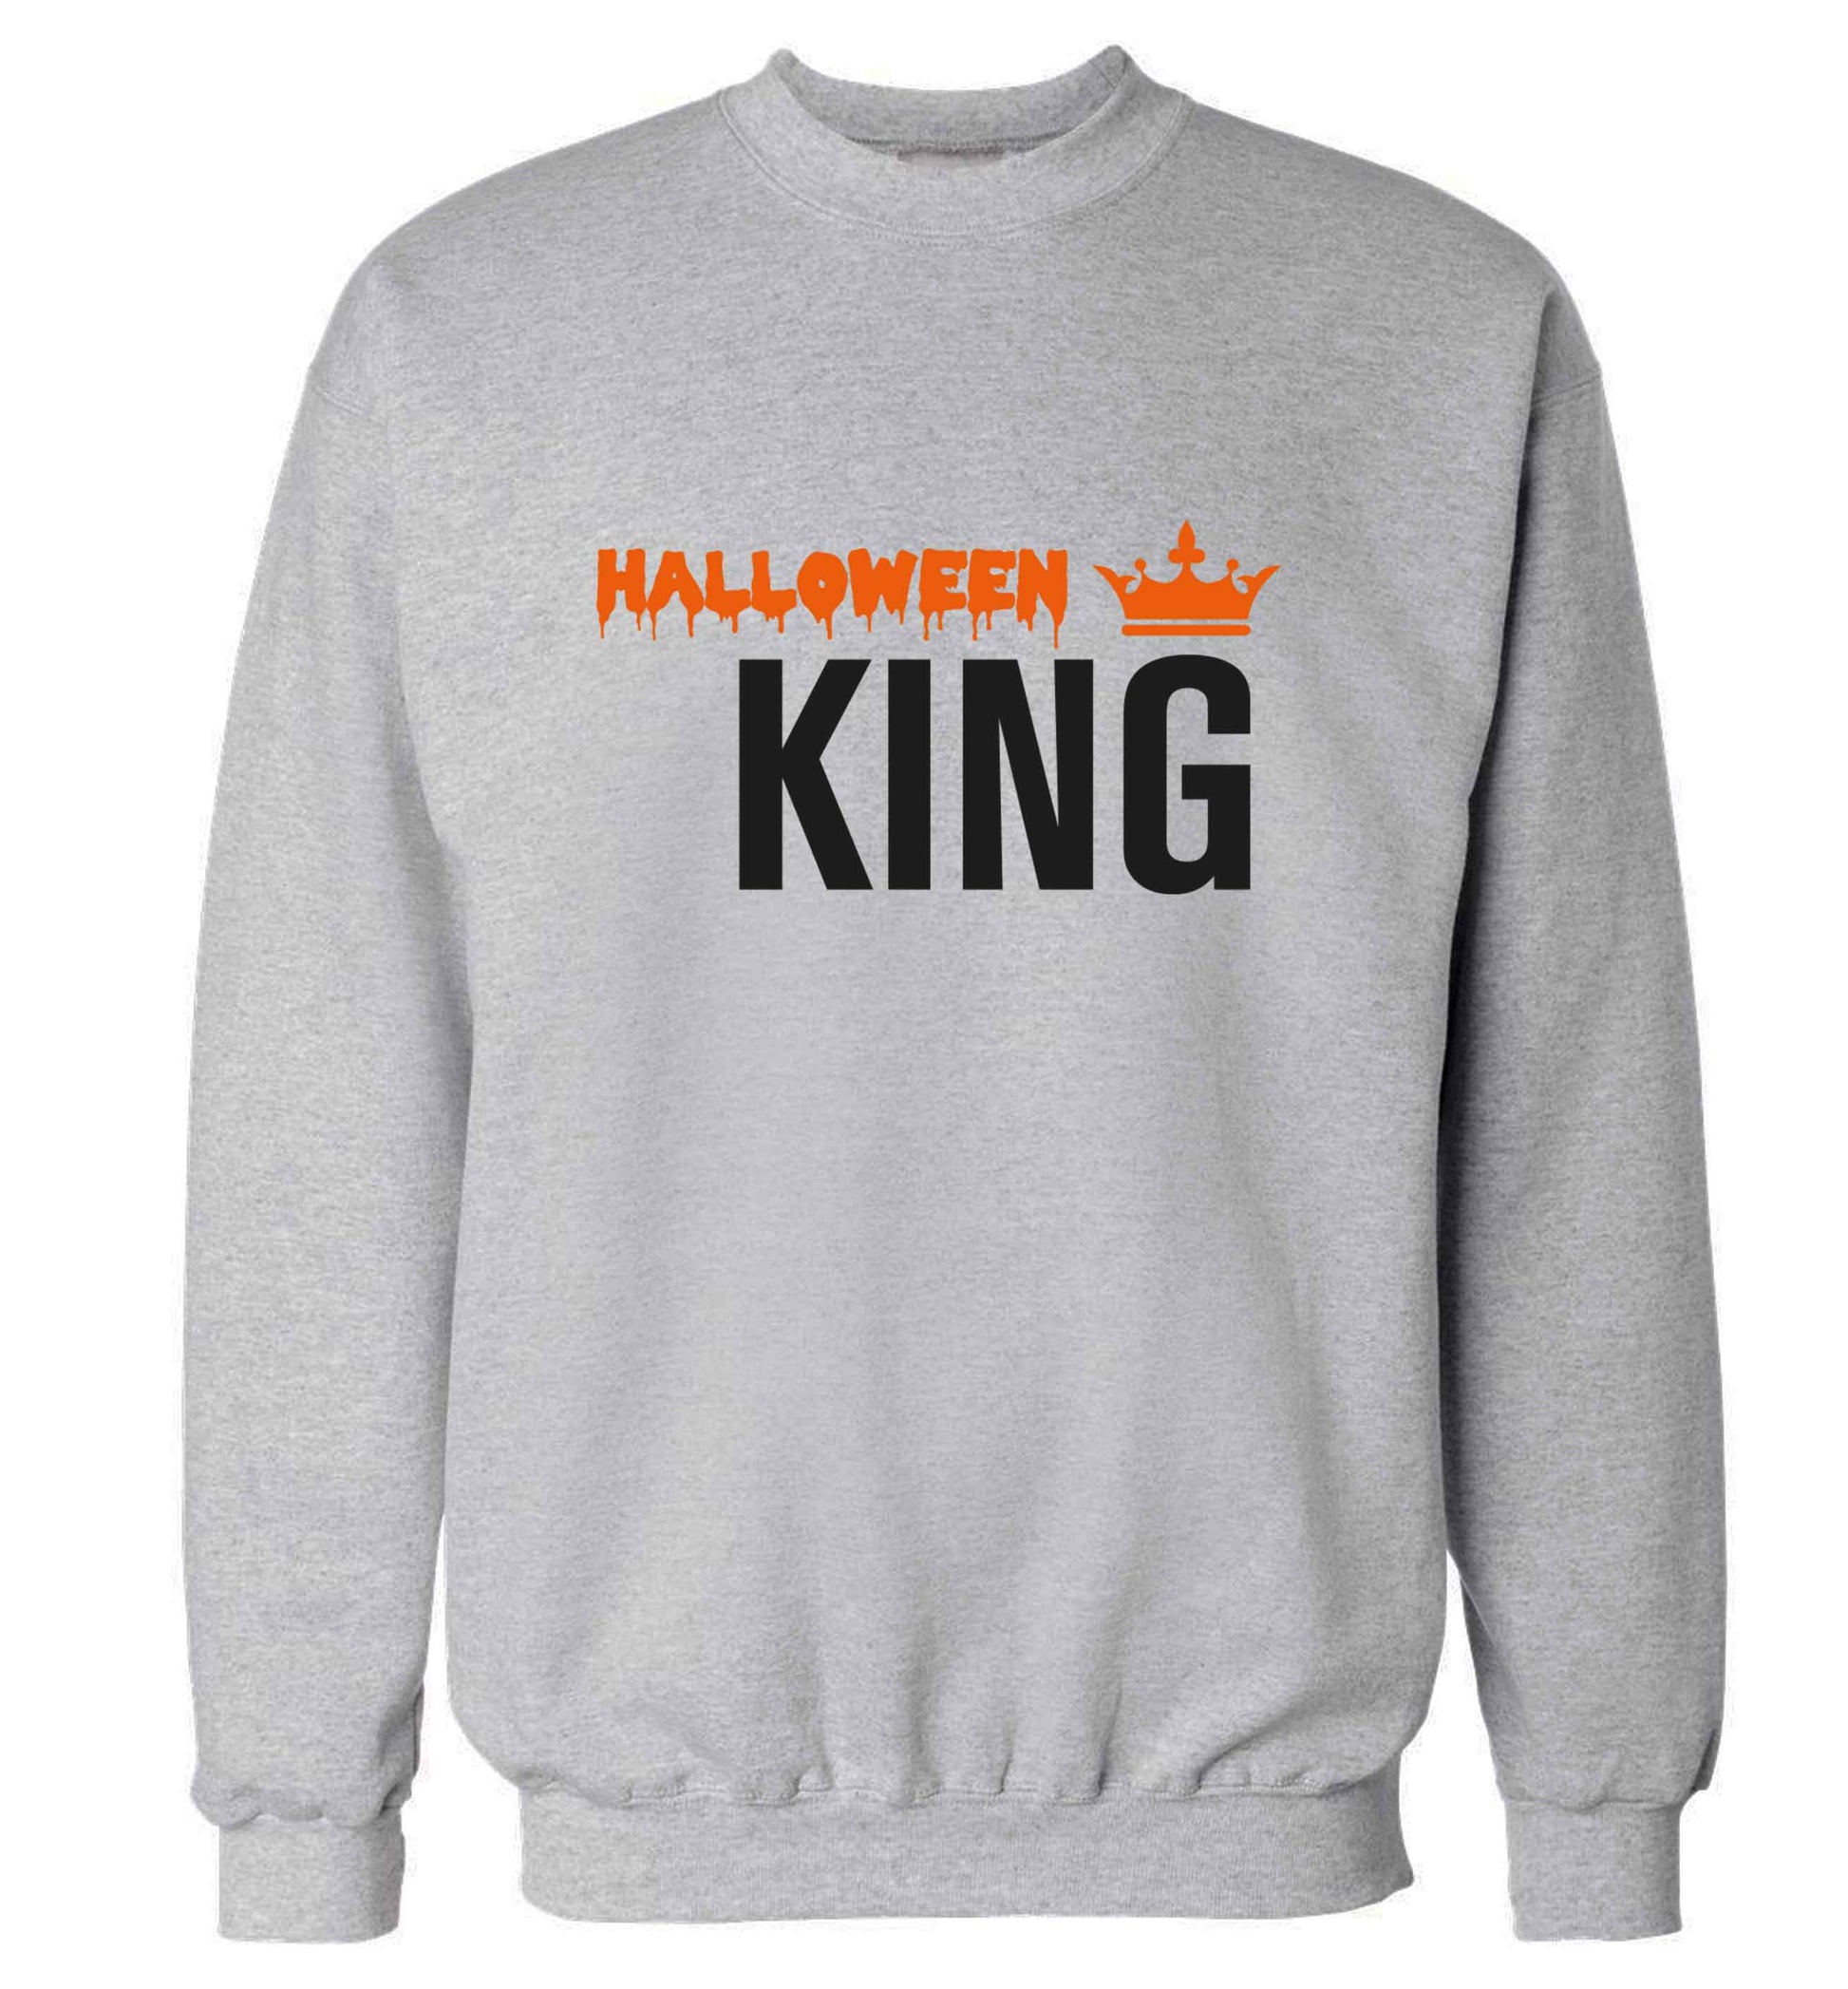 Halloween king adult's unisex grey sweater 2XL